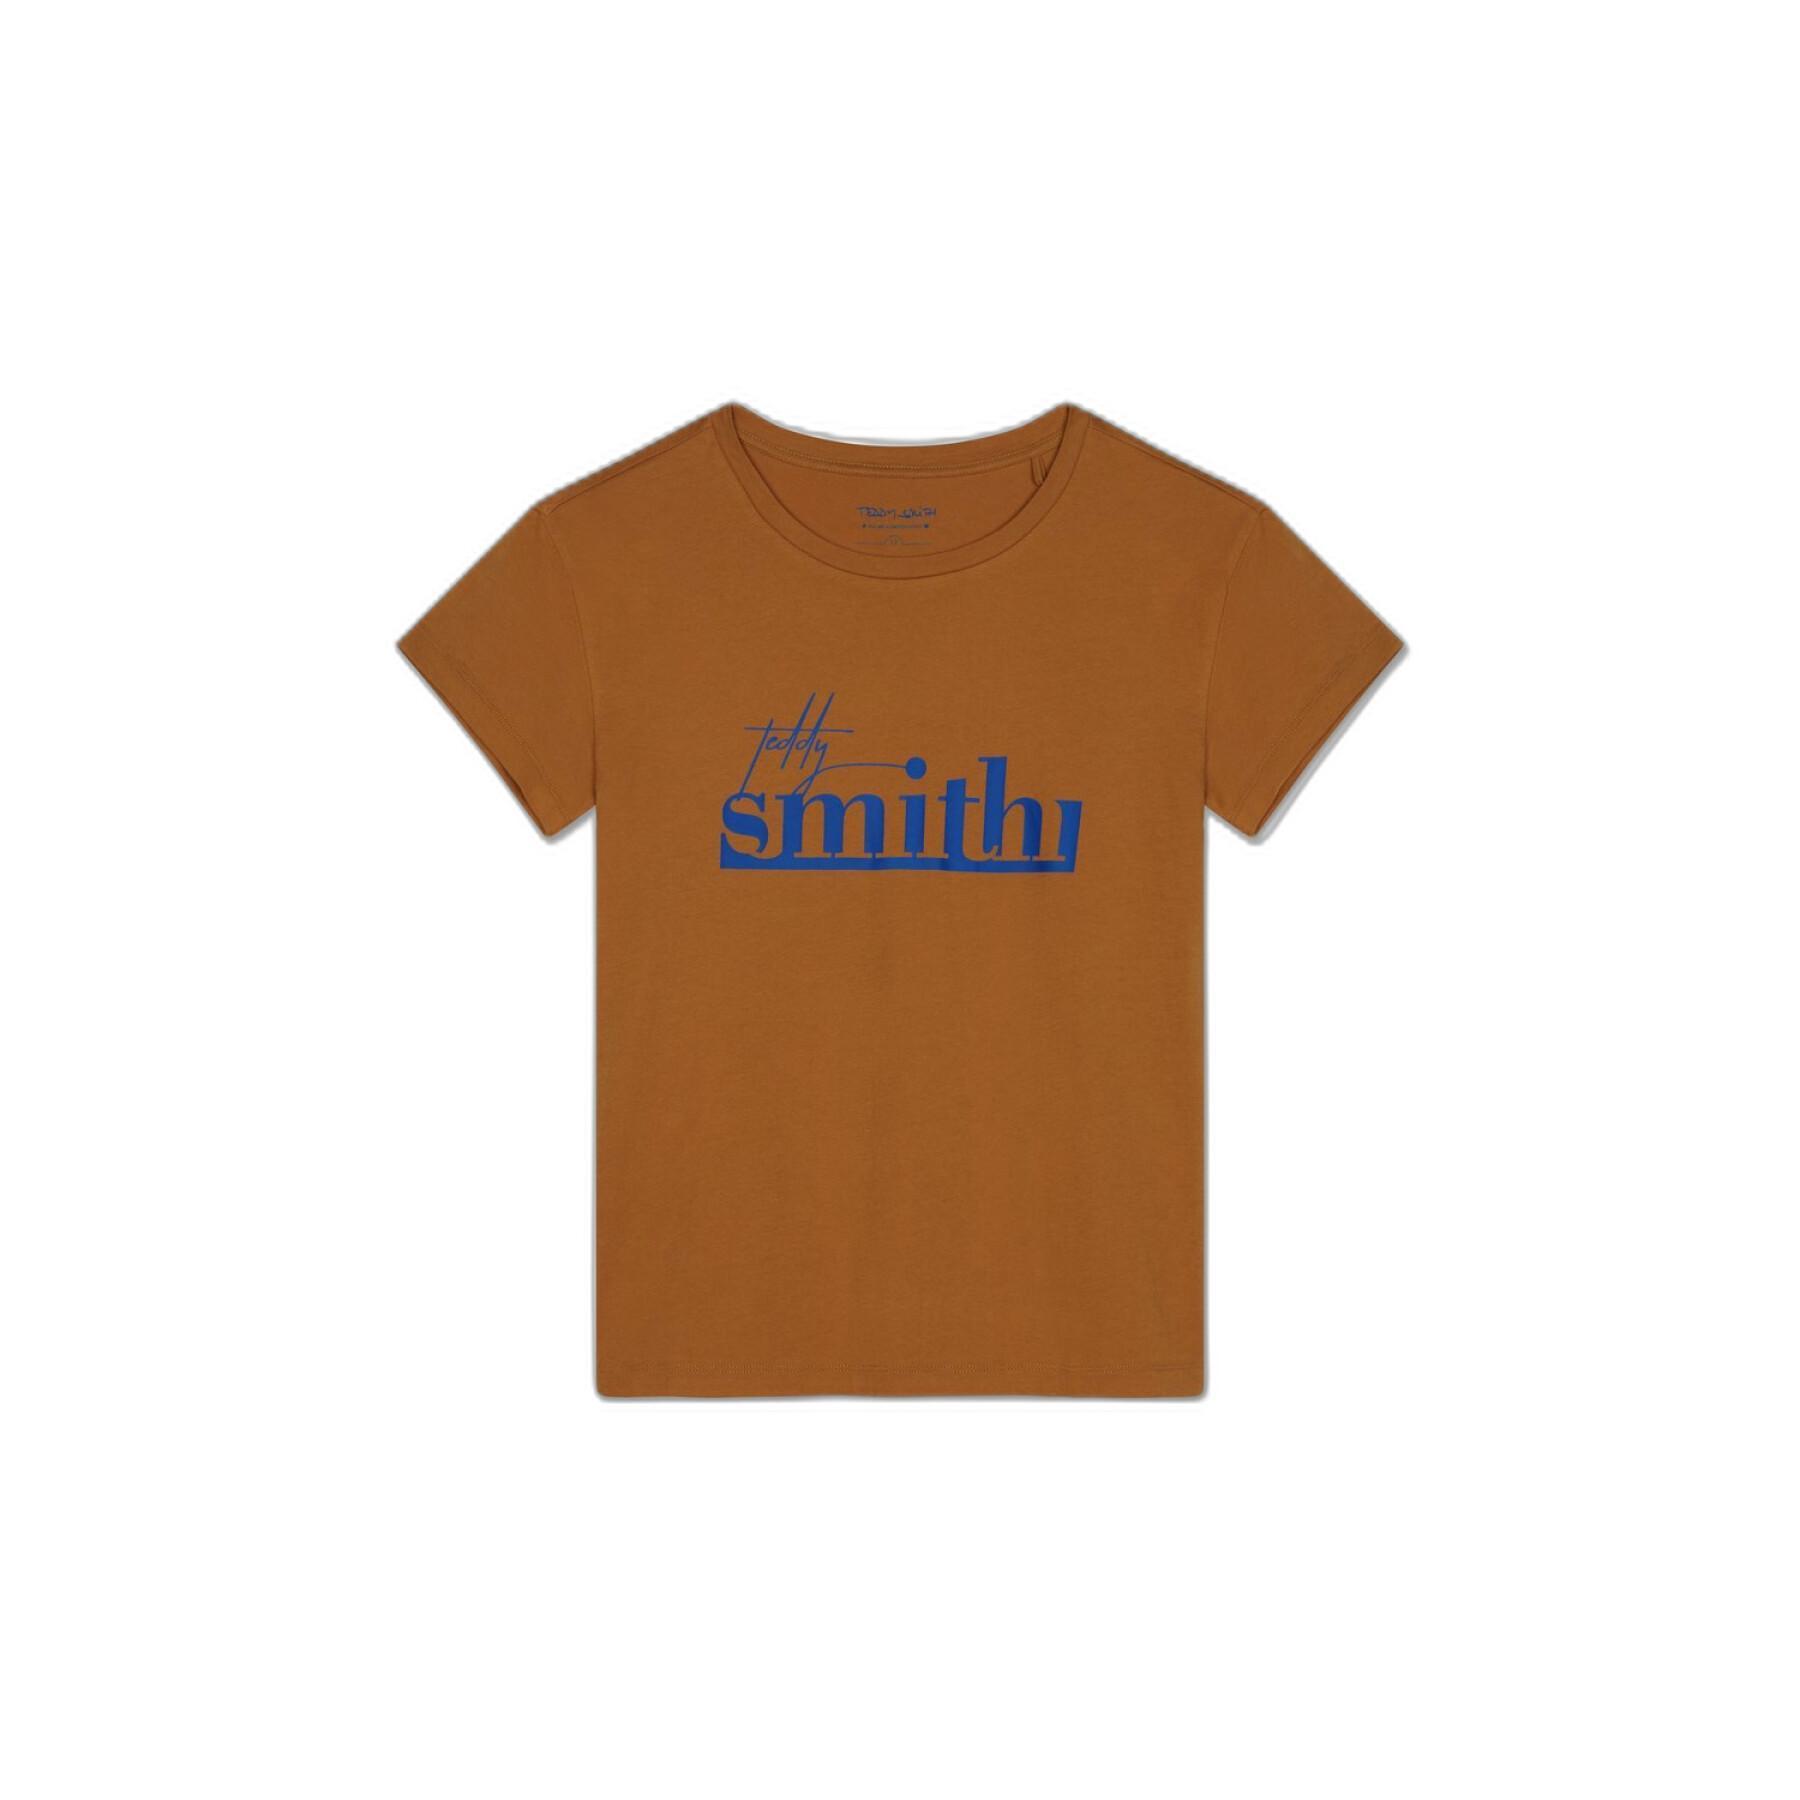 Girl's T-shirt Teddy Smith Youme